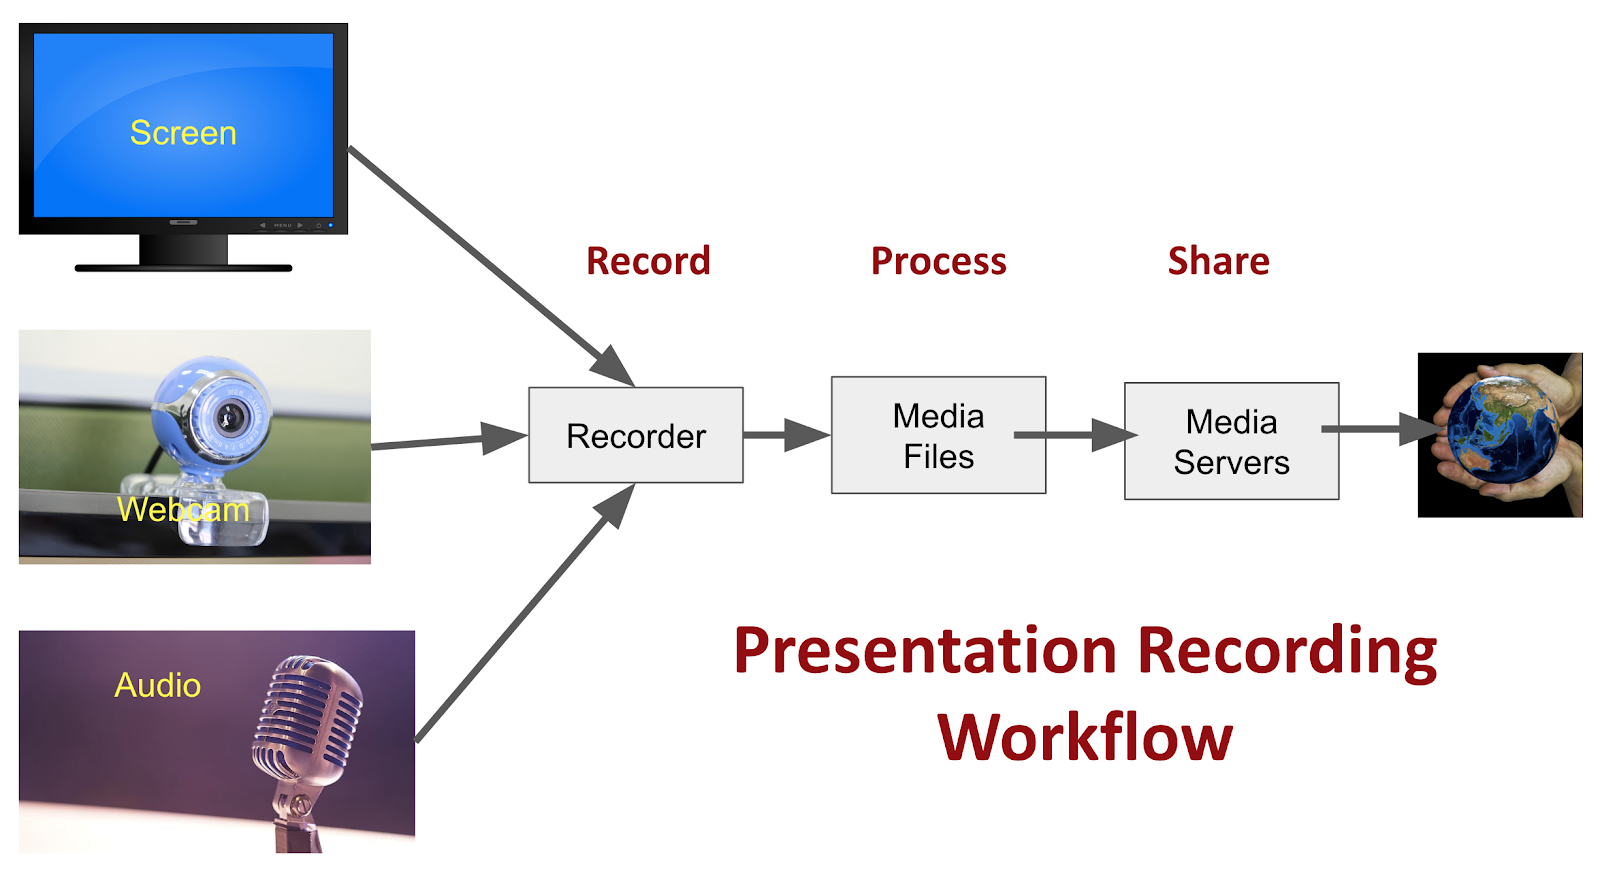 Recording workflow diagram